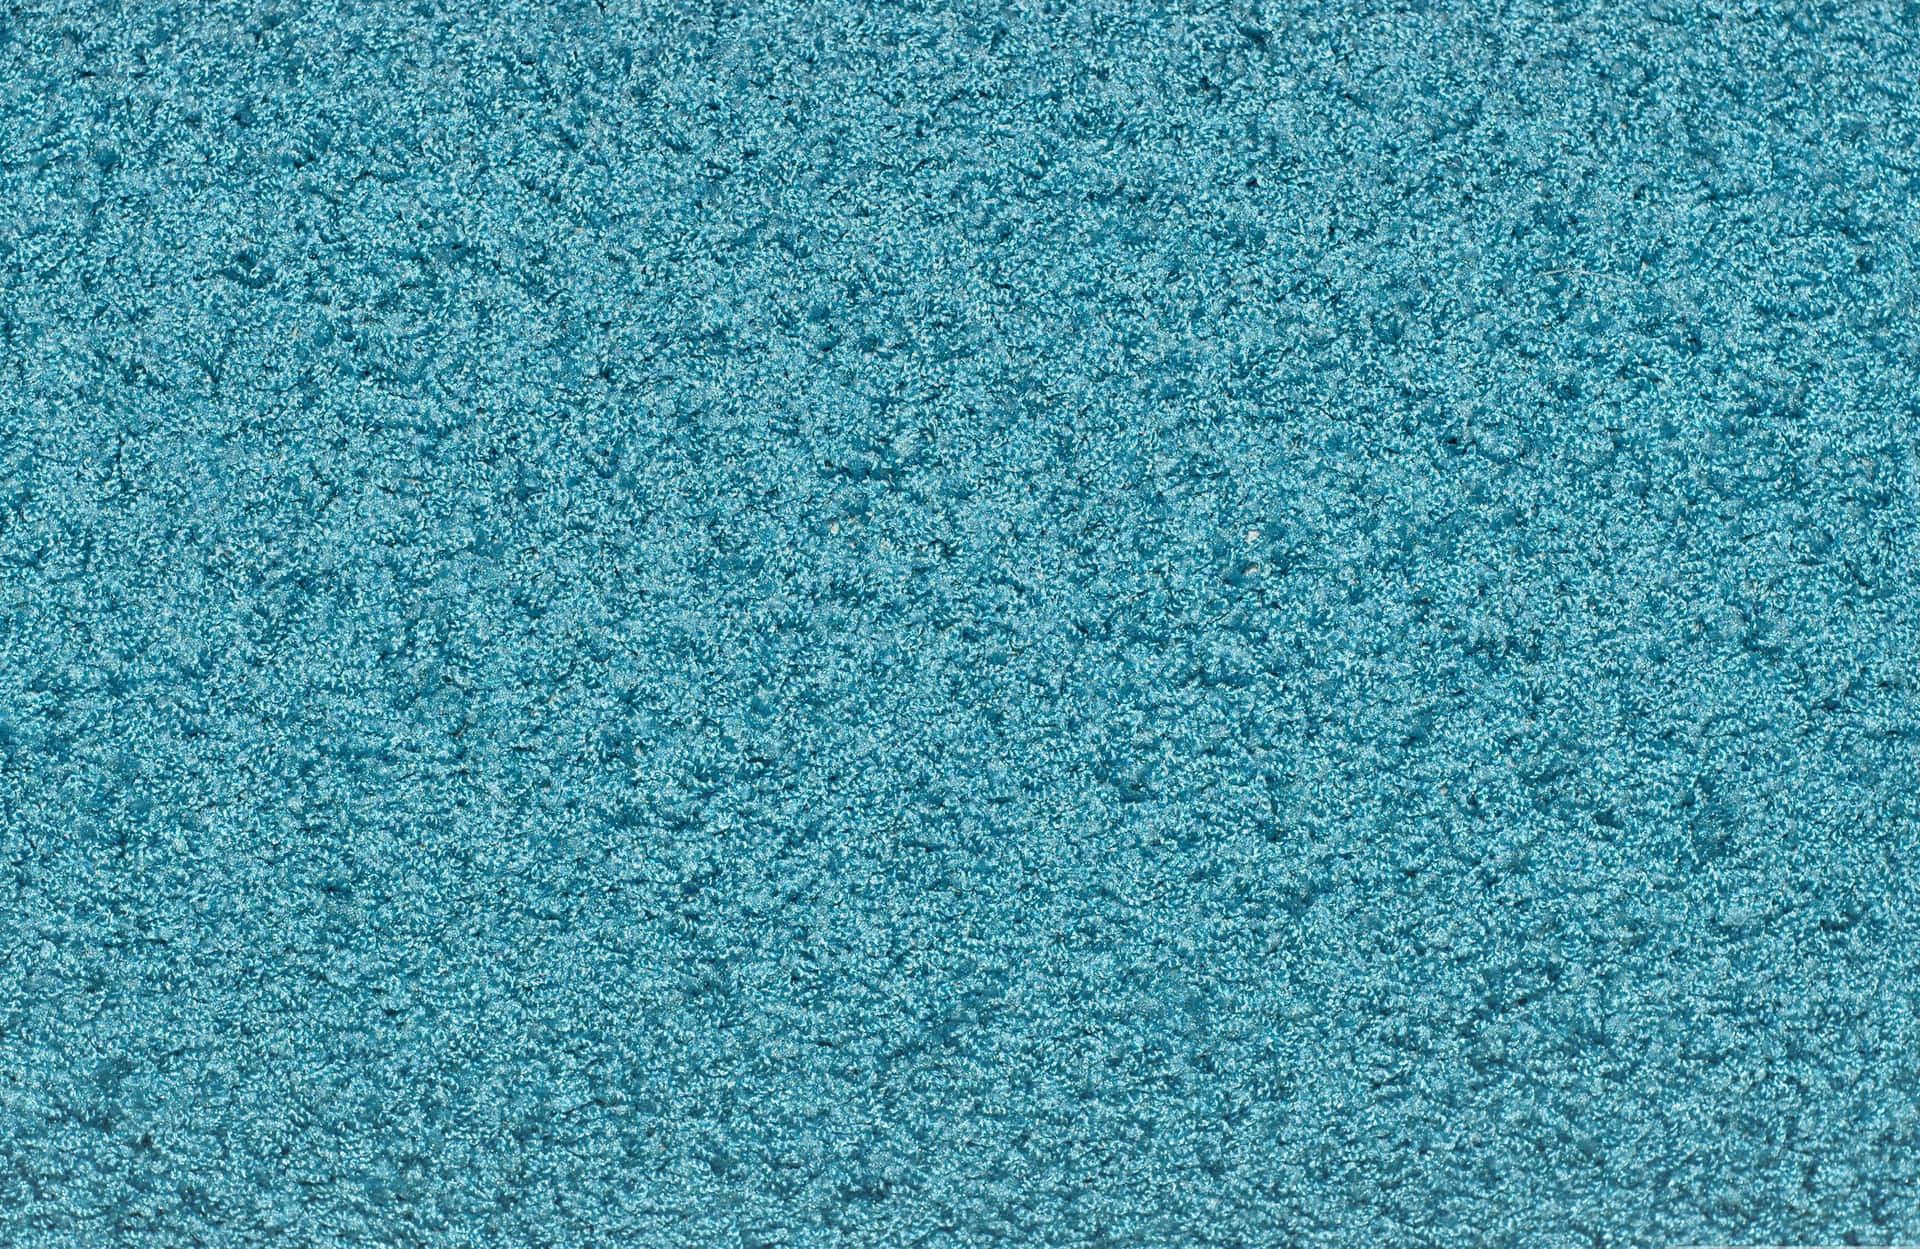 Luxurious and Fuzzy Dark Blue Carpet Texture